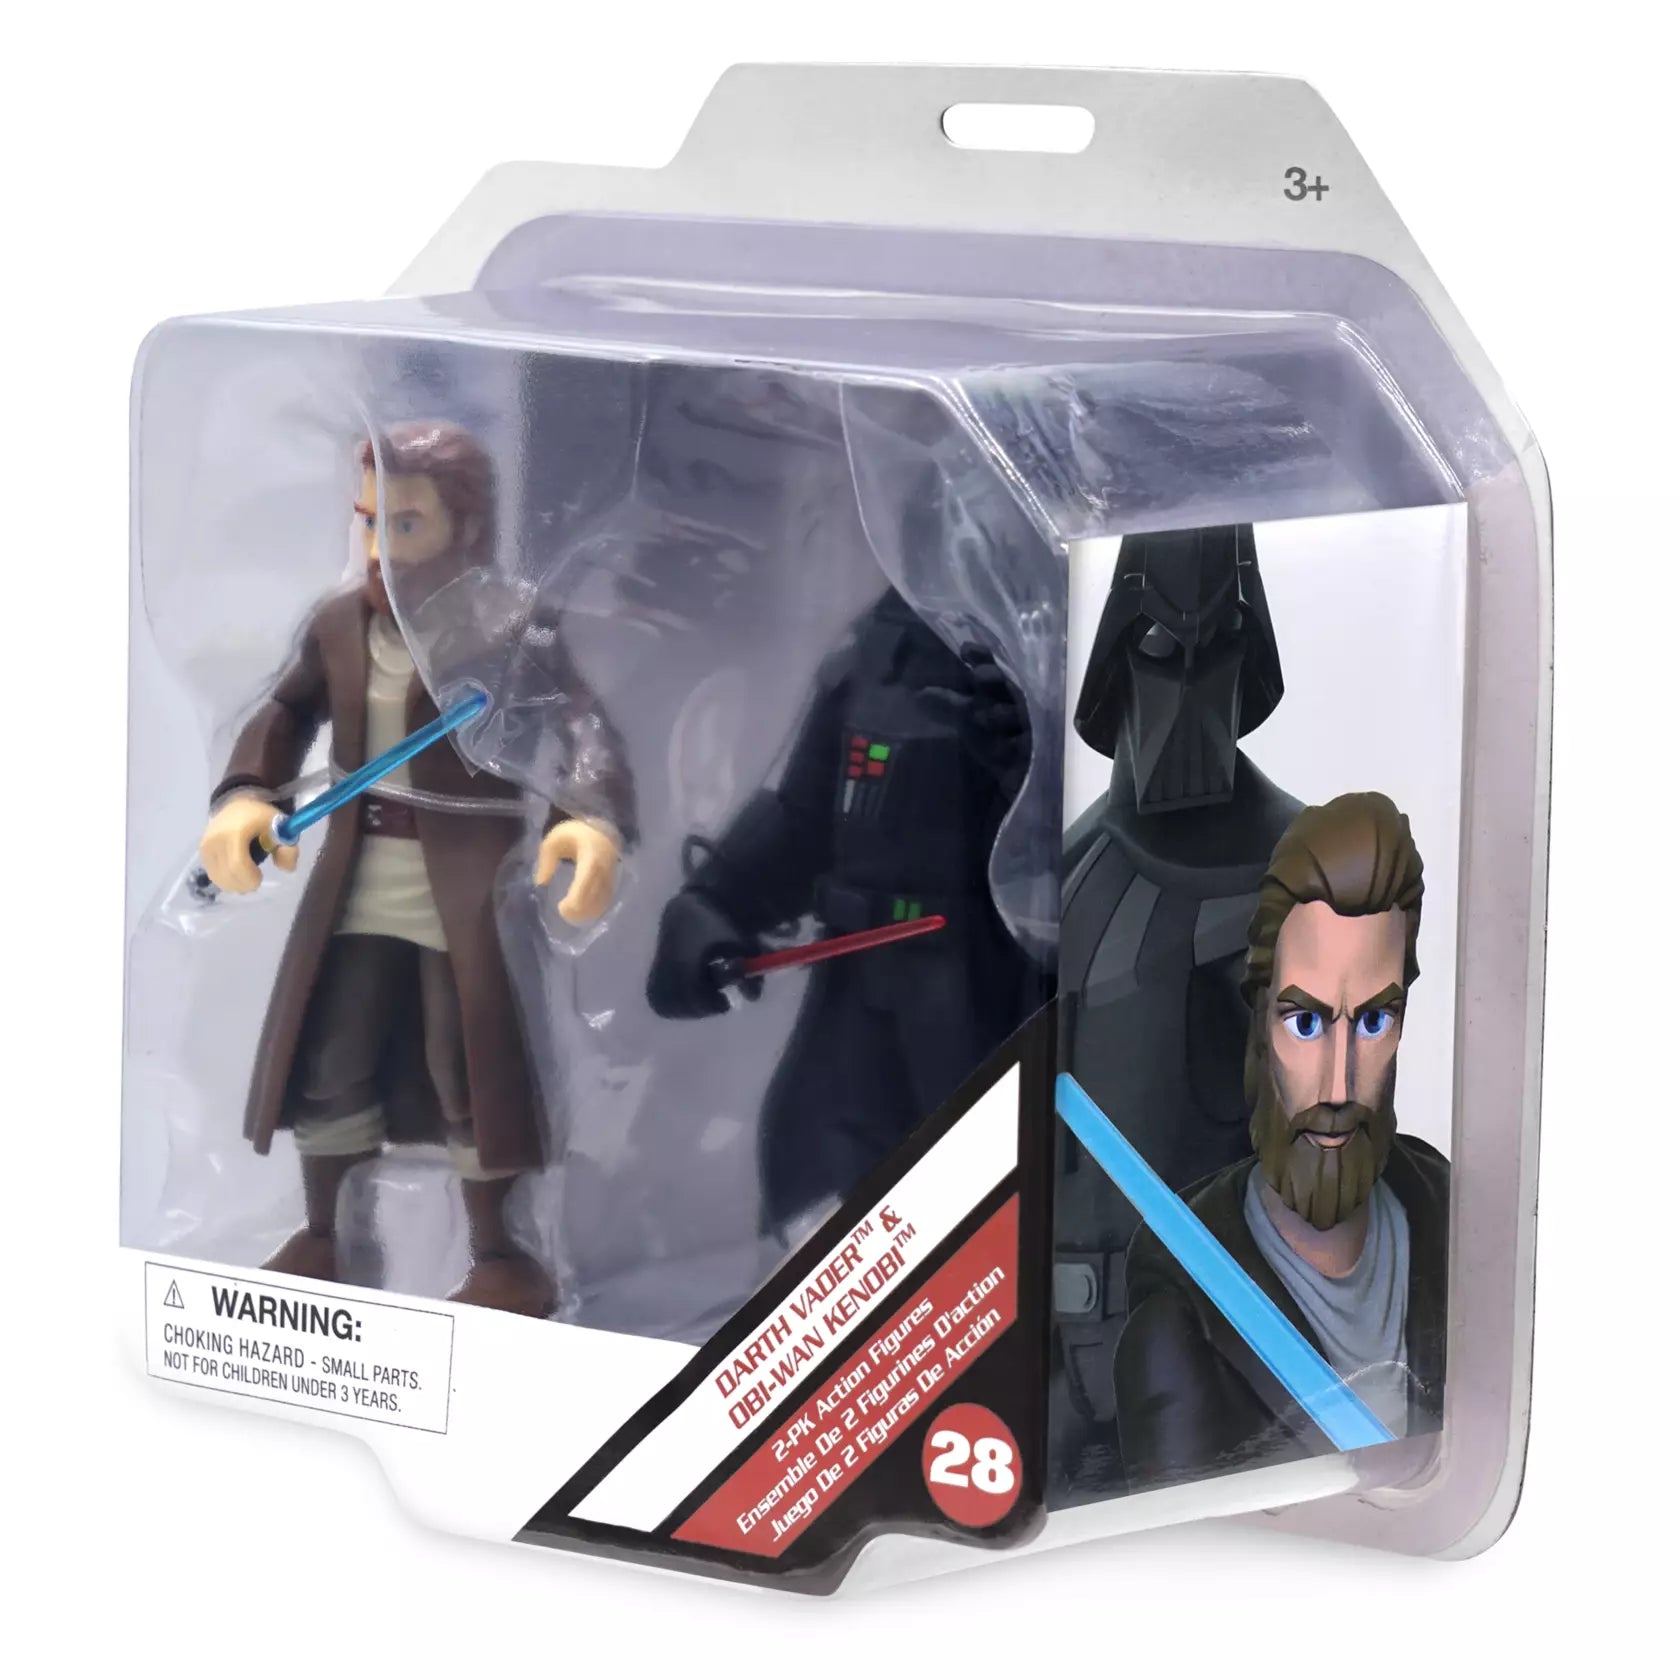 Disney Darth Vader and Obi-Wan Kenobi Action Figure Set – Star Wars Toybox - BumbleToys - 2-4 Years, 5-7 Years, 6+ Years, Disney, OXE, star wars